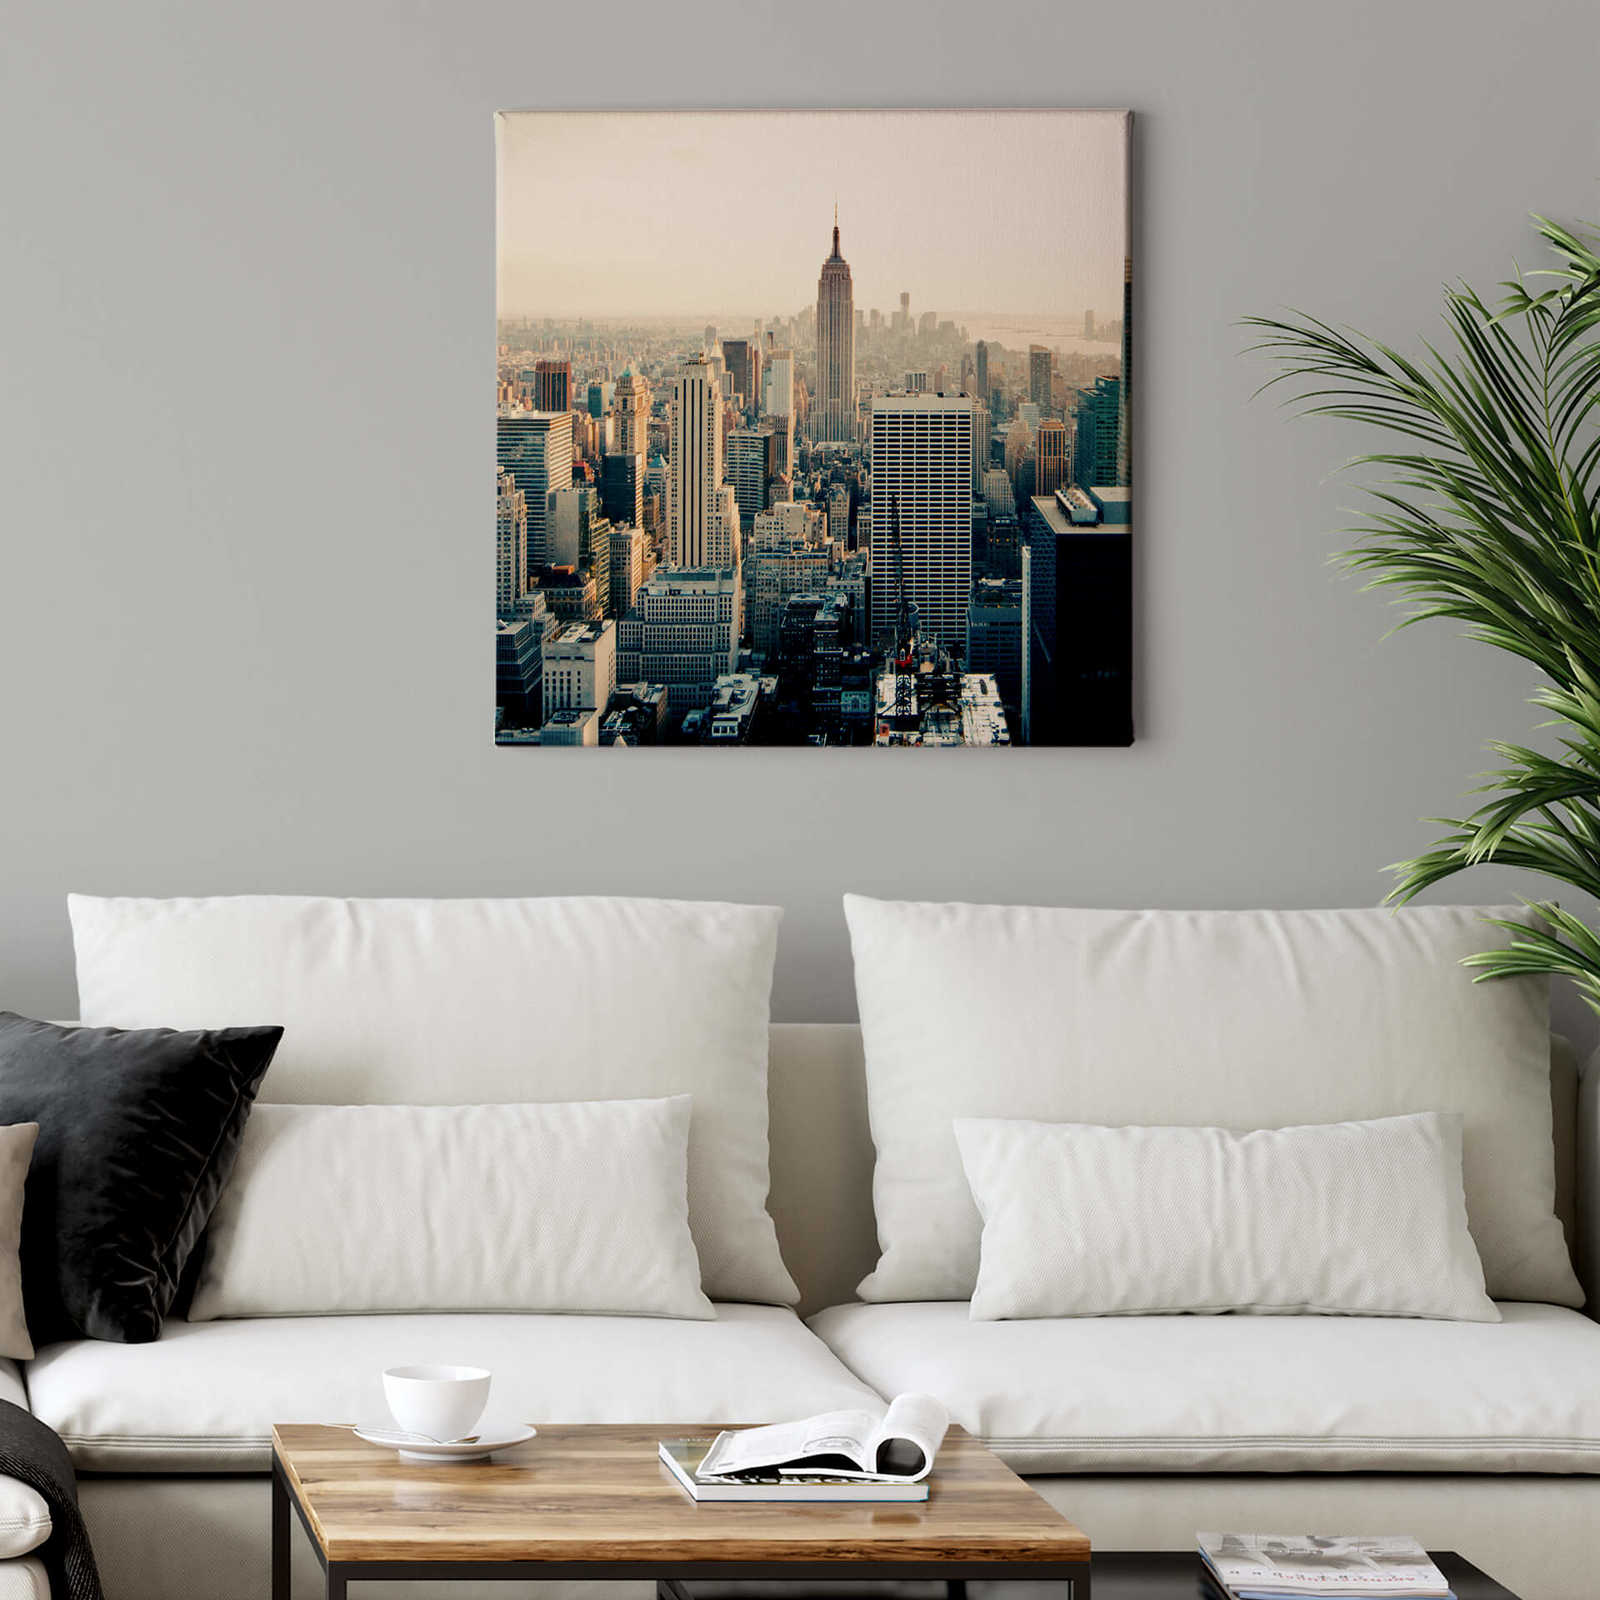             Quadratisches Leinwandbild Skyline New York – 0,50 m x 0,50 m
        